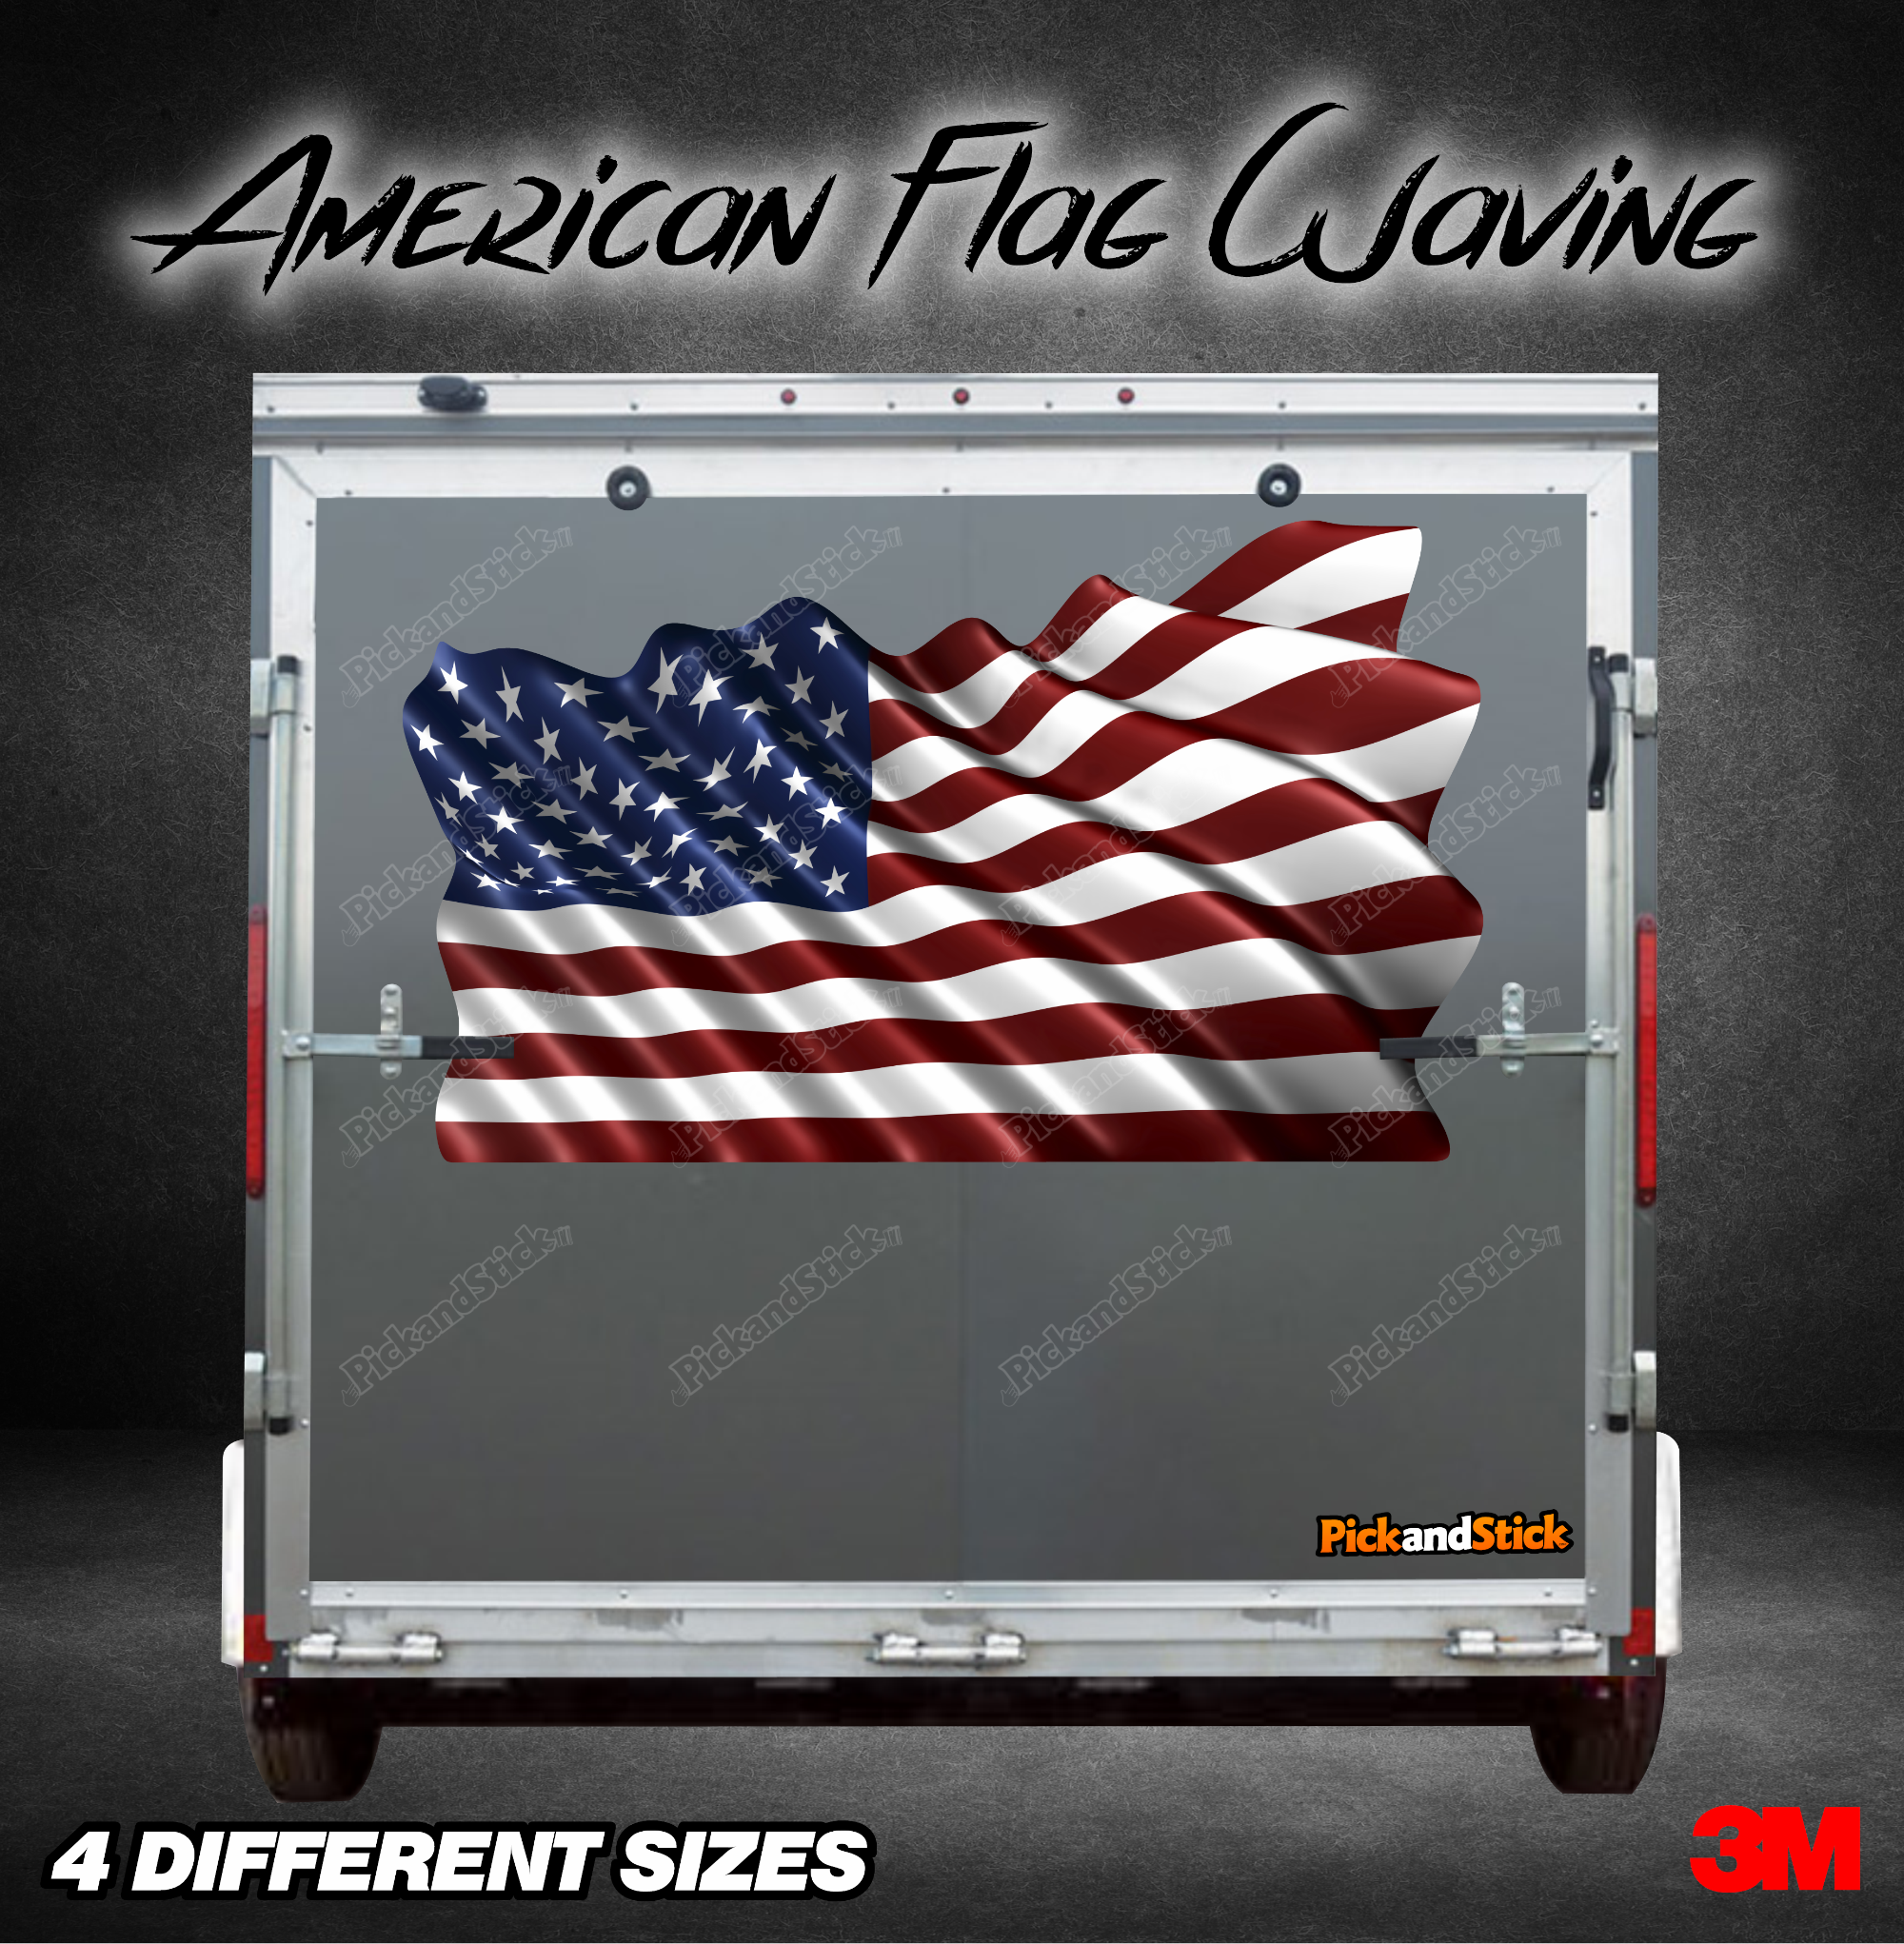 American Flag Waving Graphic - PickandStickcom